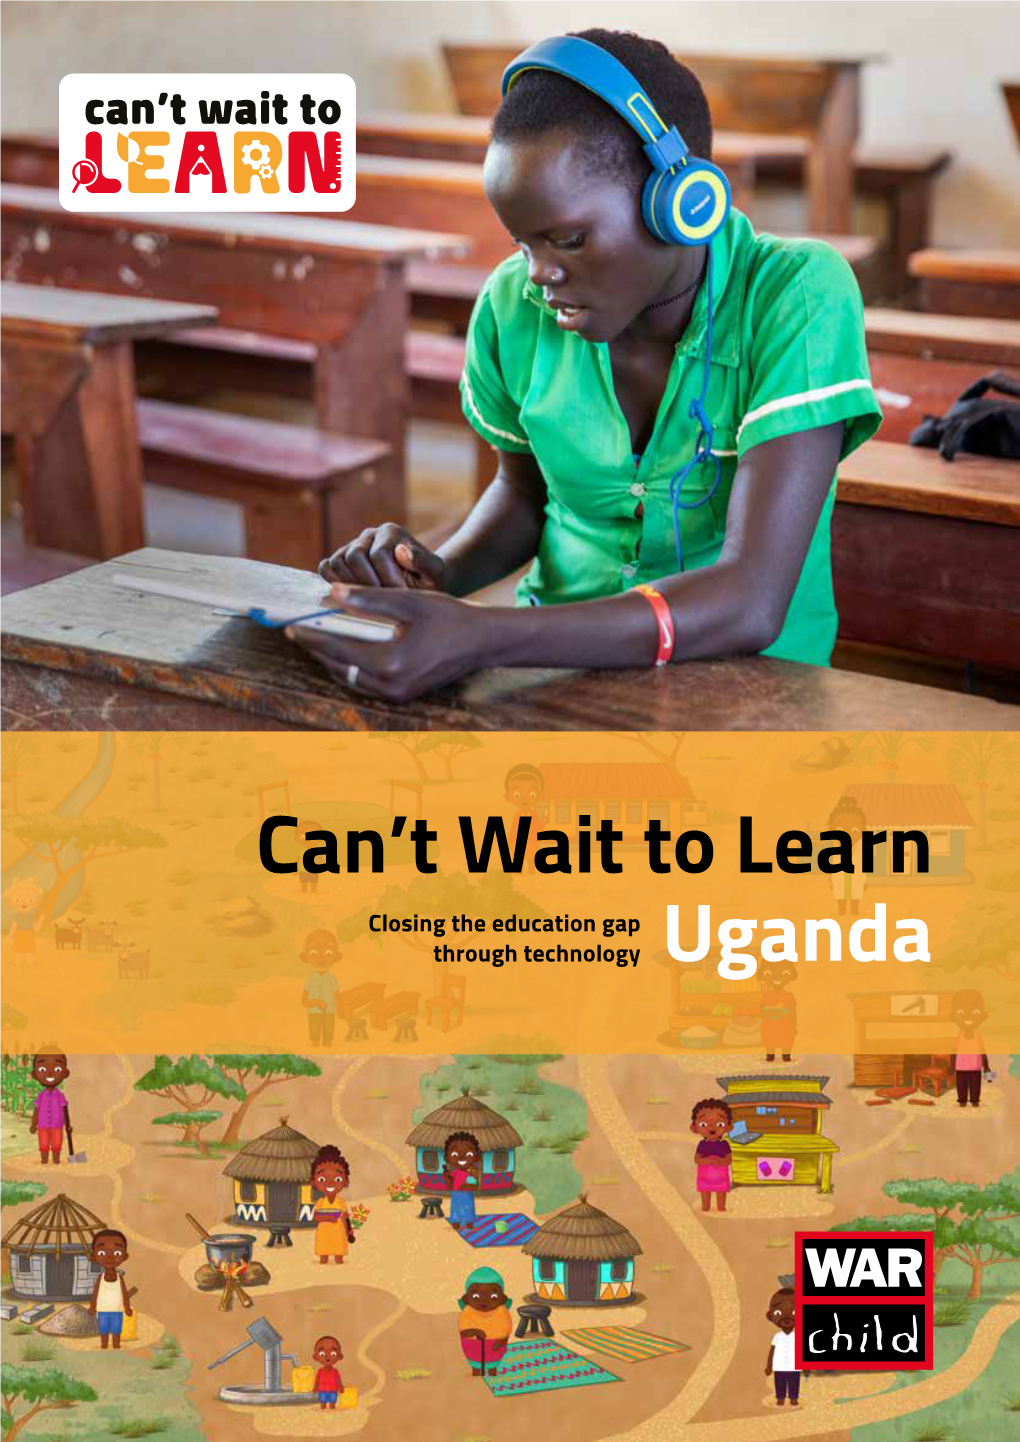 Can't Wait to Learn Uganda